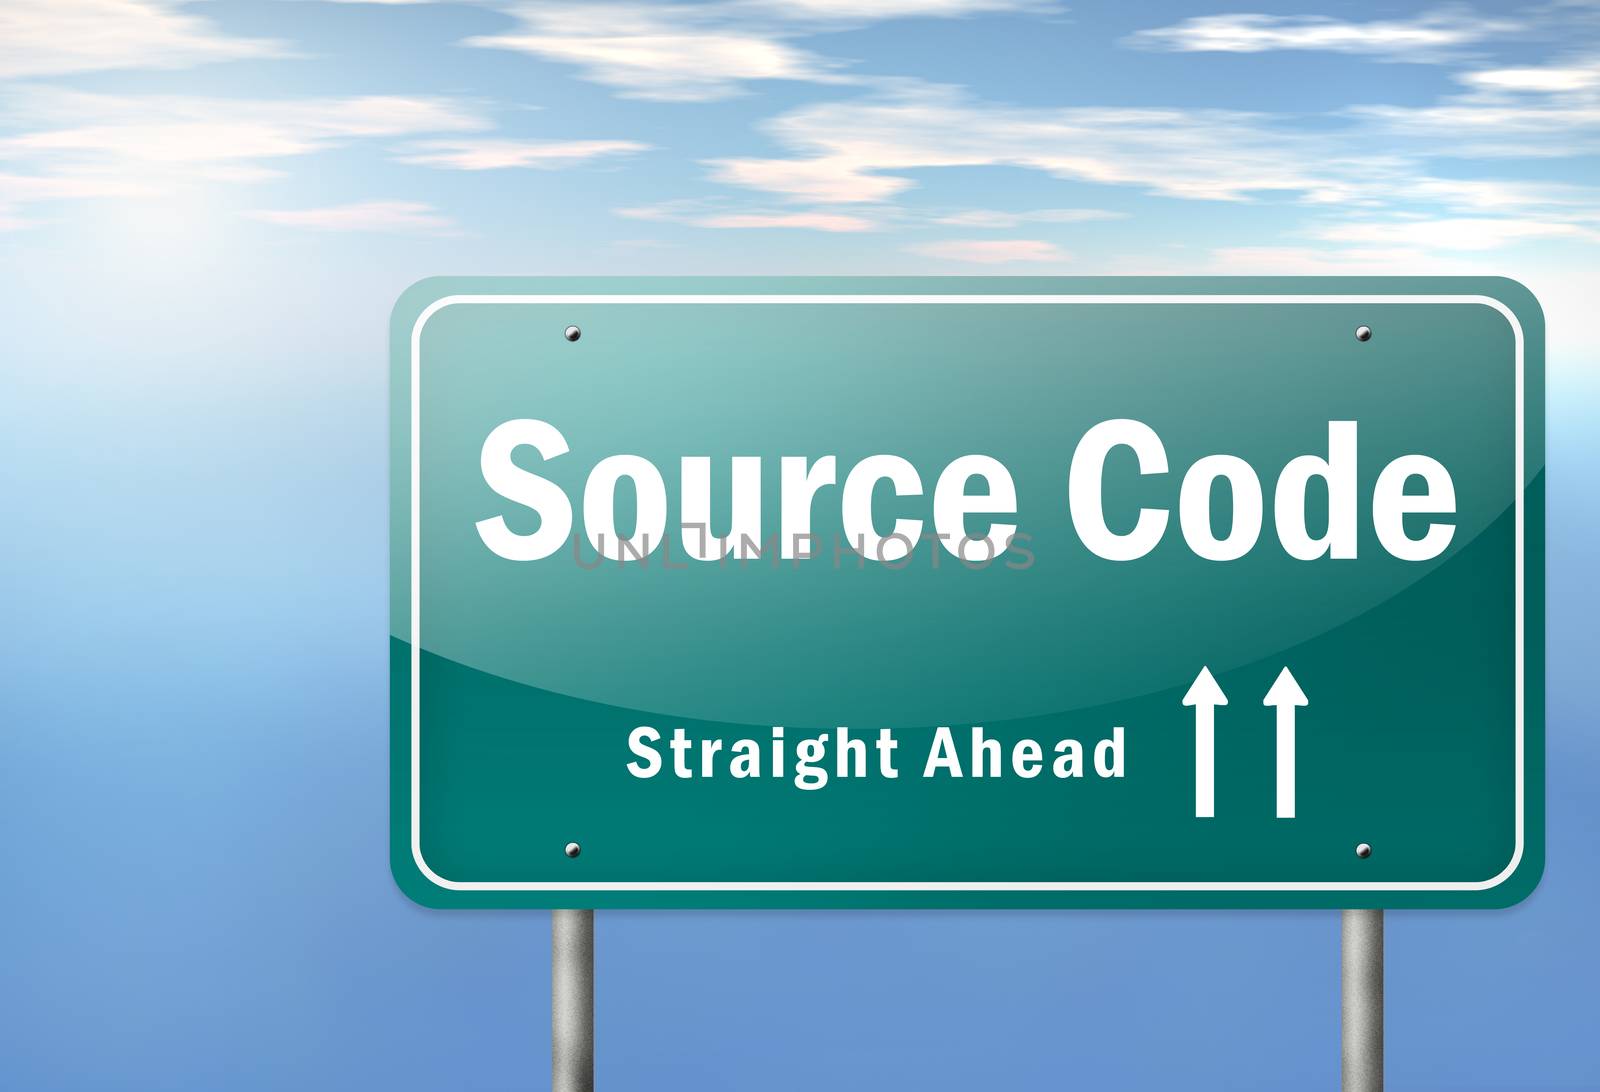 Highway Signpost with Source Code wording